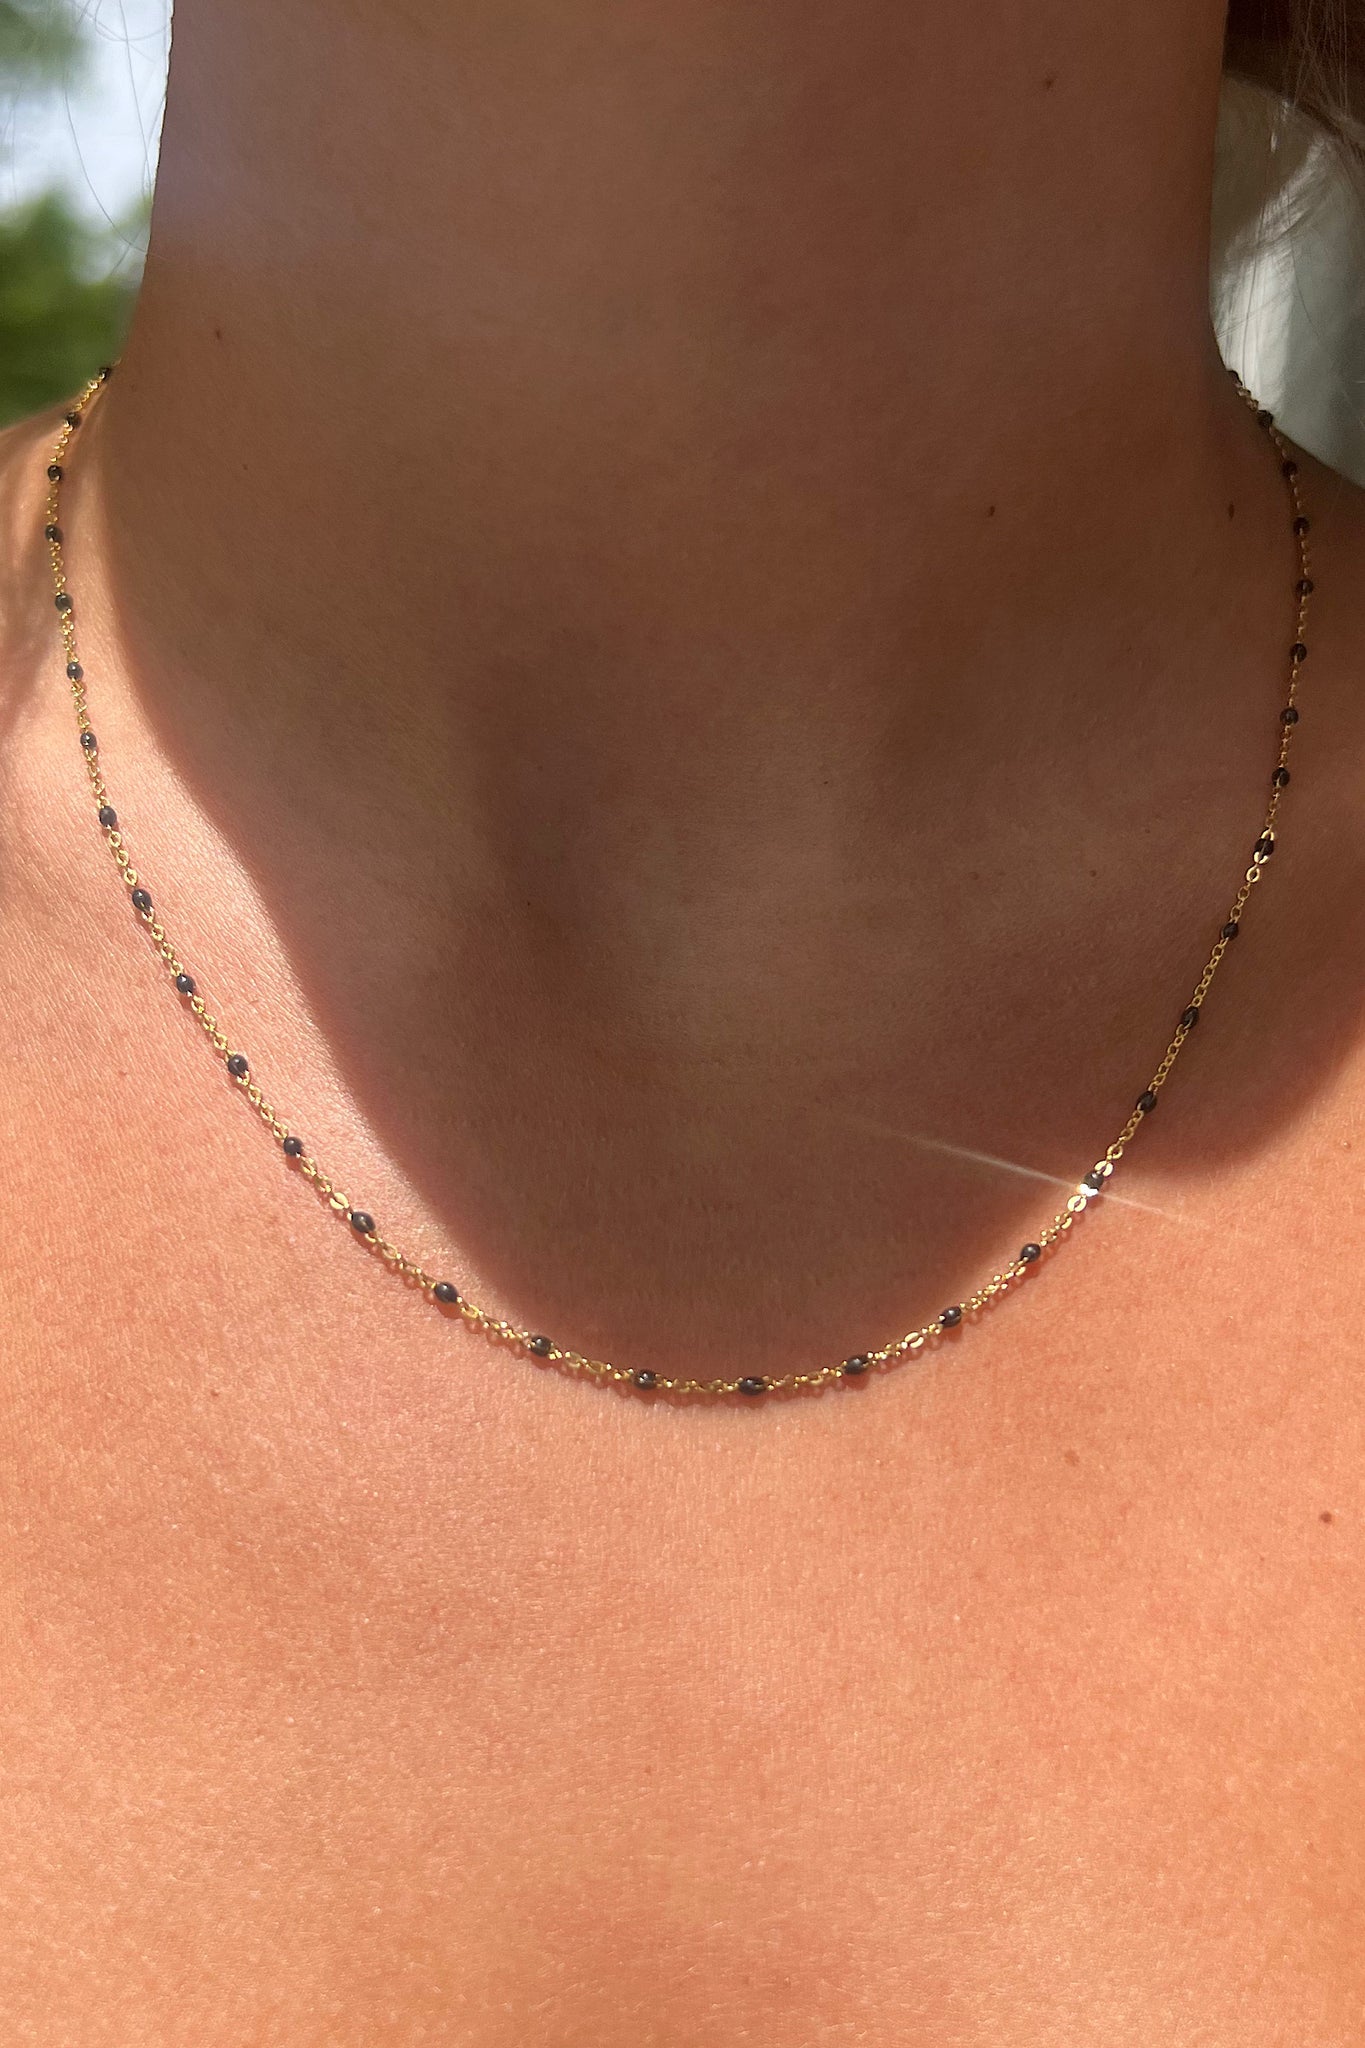 Black Enamel Beaded Necklace